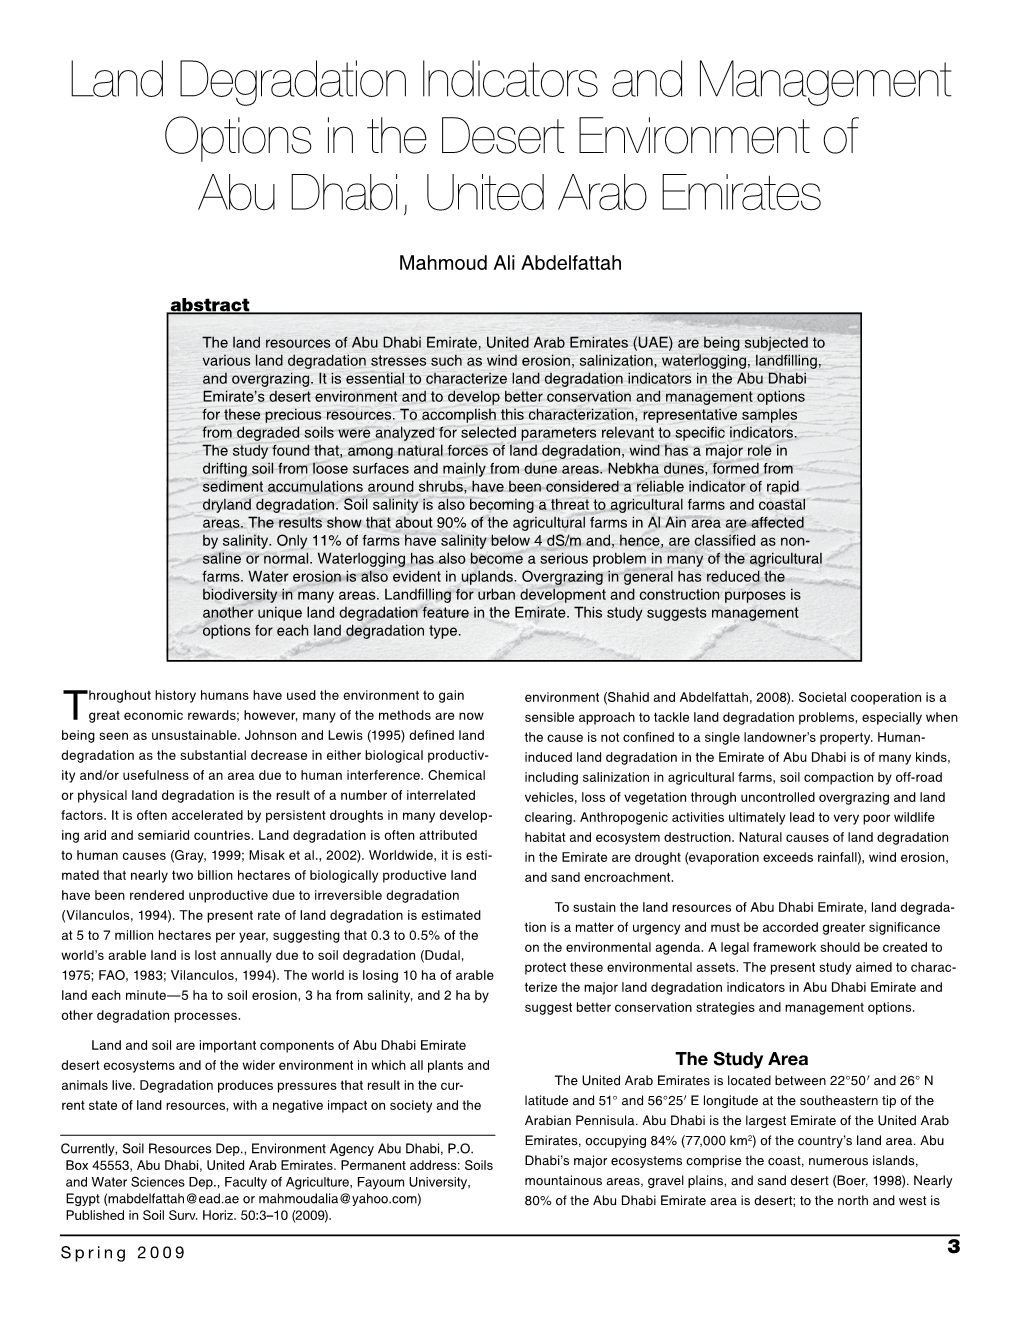 Land Degradation Indicators and Management Options in the Desert Environment of Abu Dhabi, United Arab Emirates